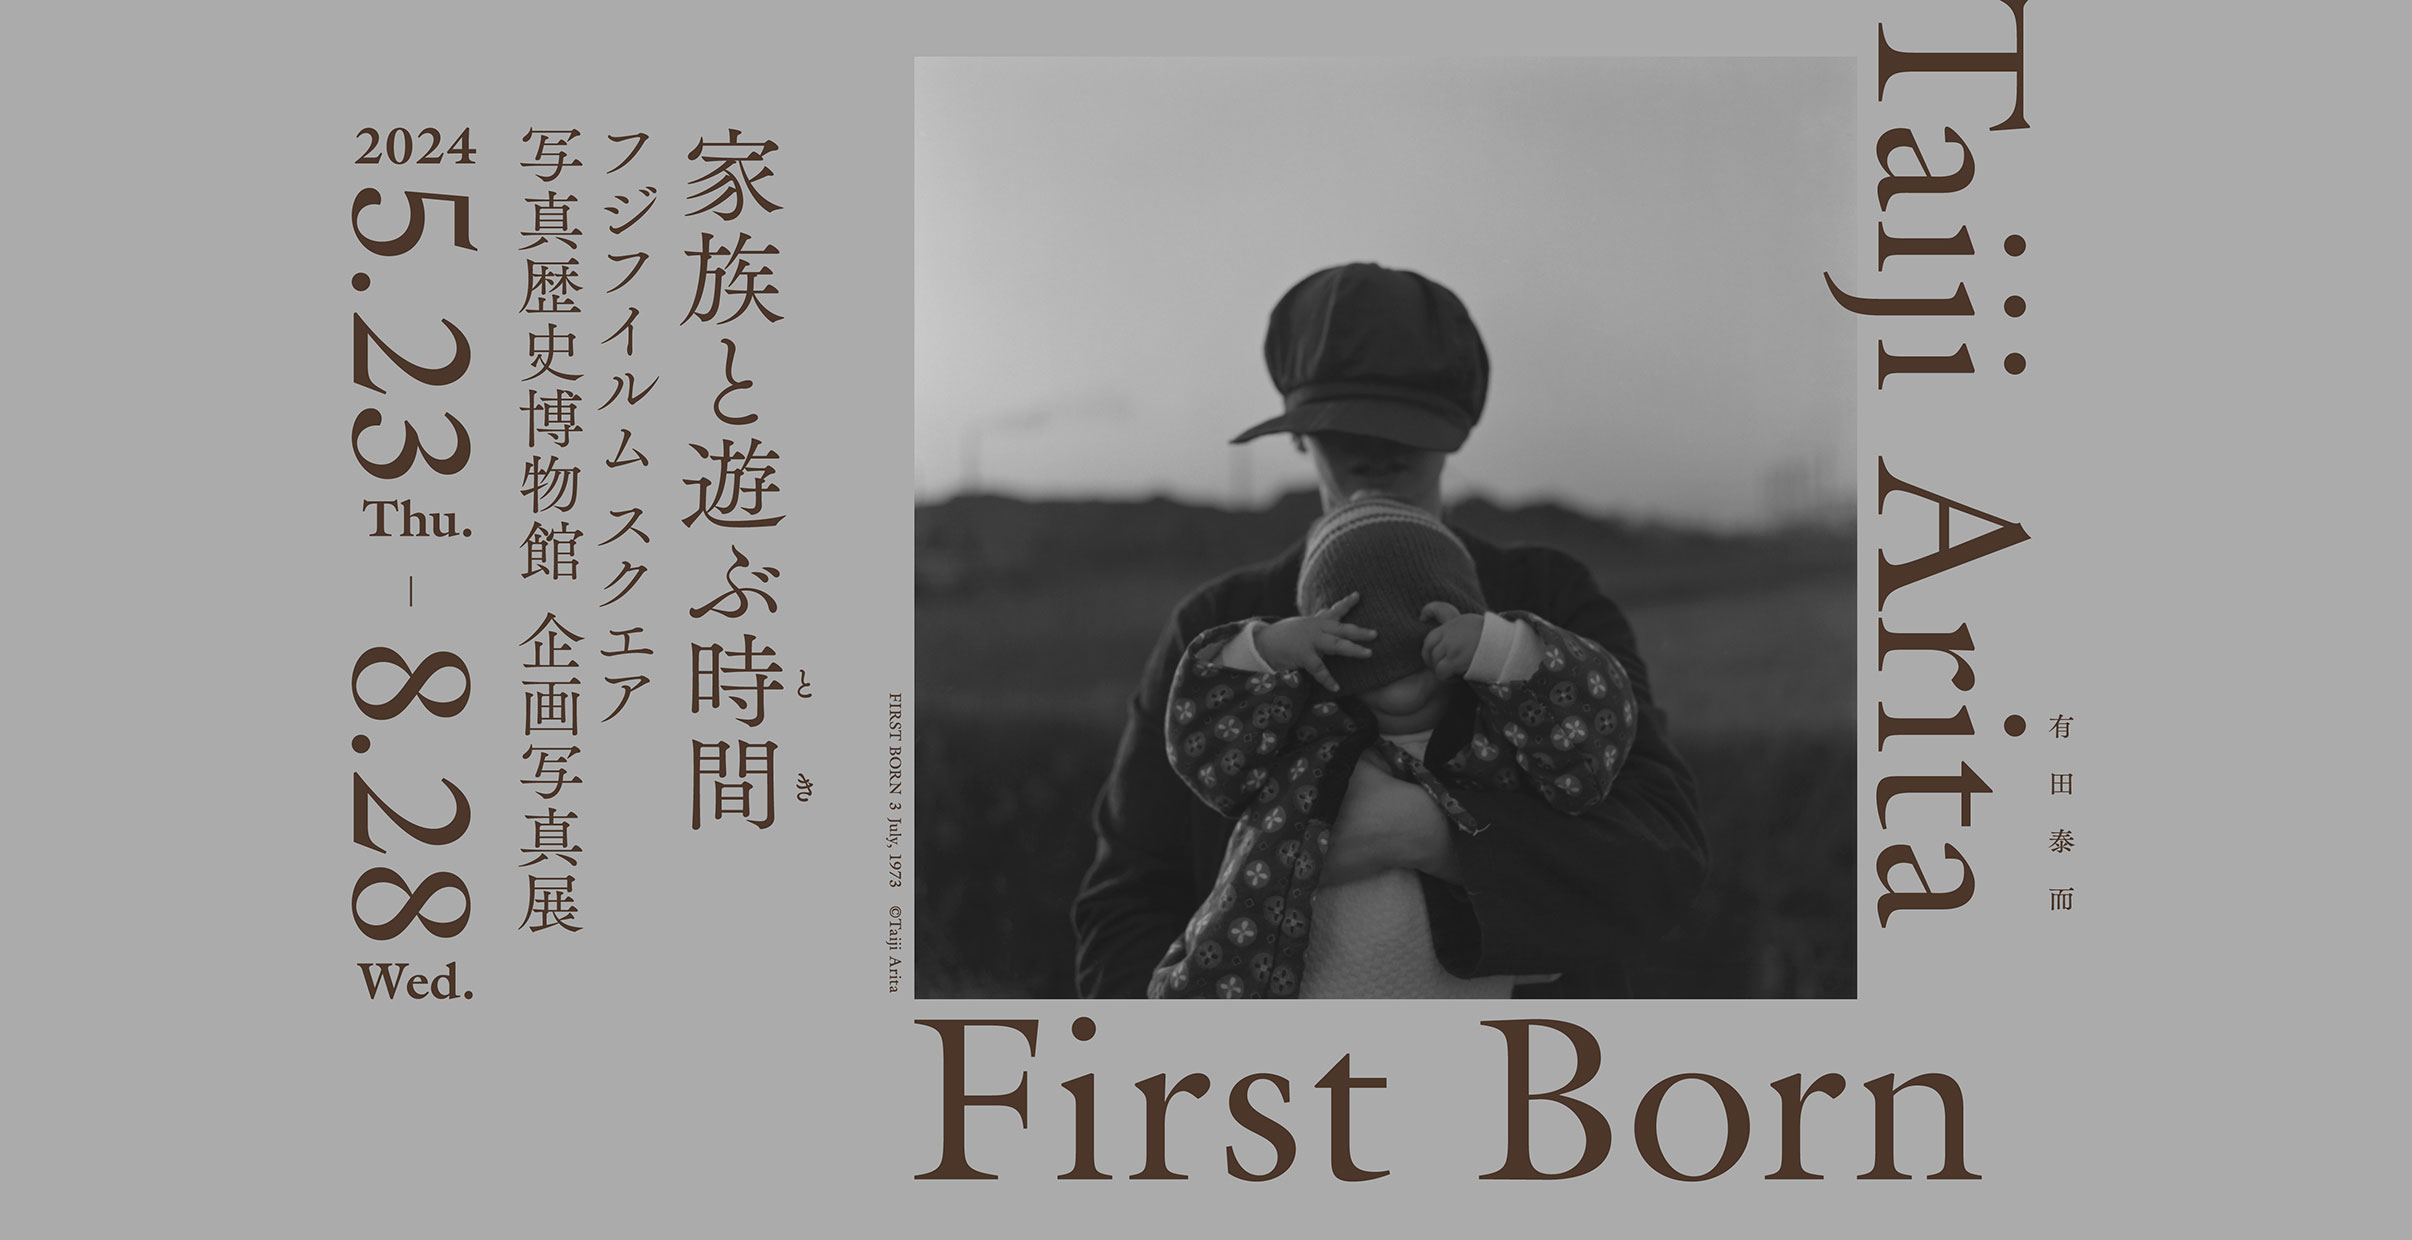 [image]有田泰而「First Born」 ― 家族と遊ぶ時間 ―